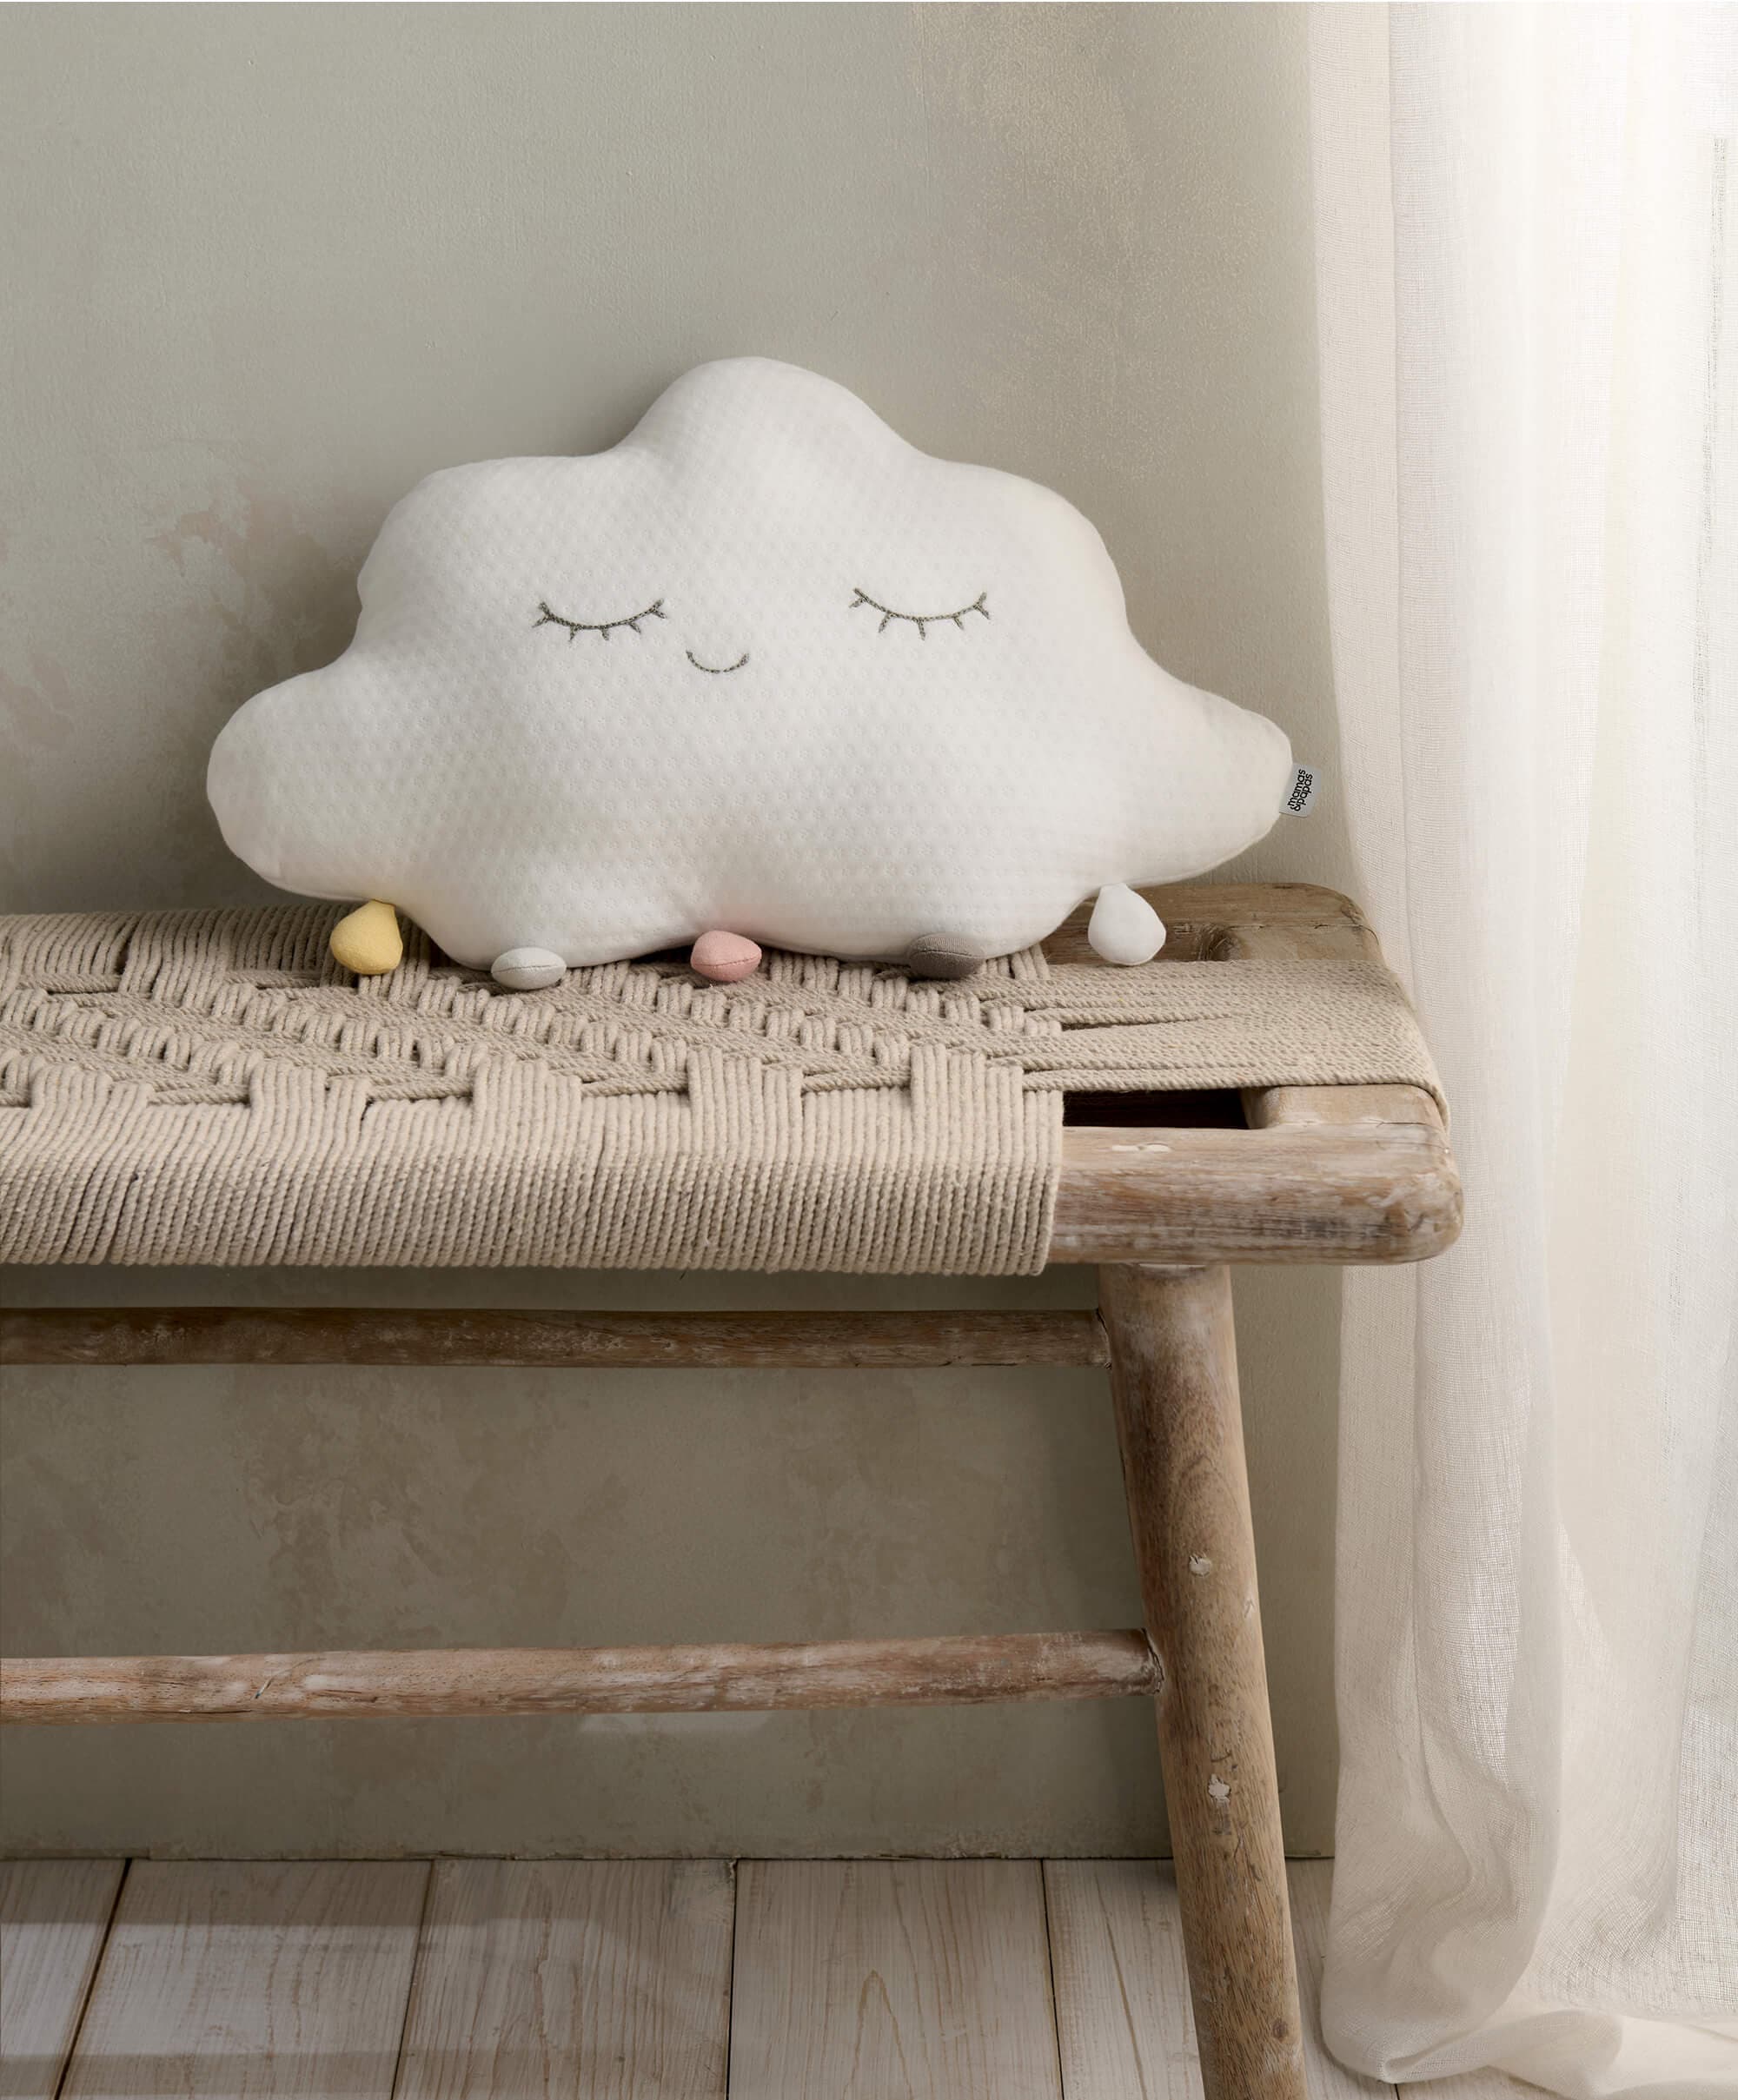 Parent's Choice Decorative Cloud Pillow